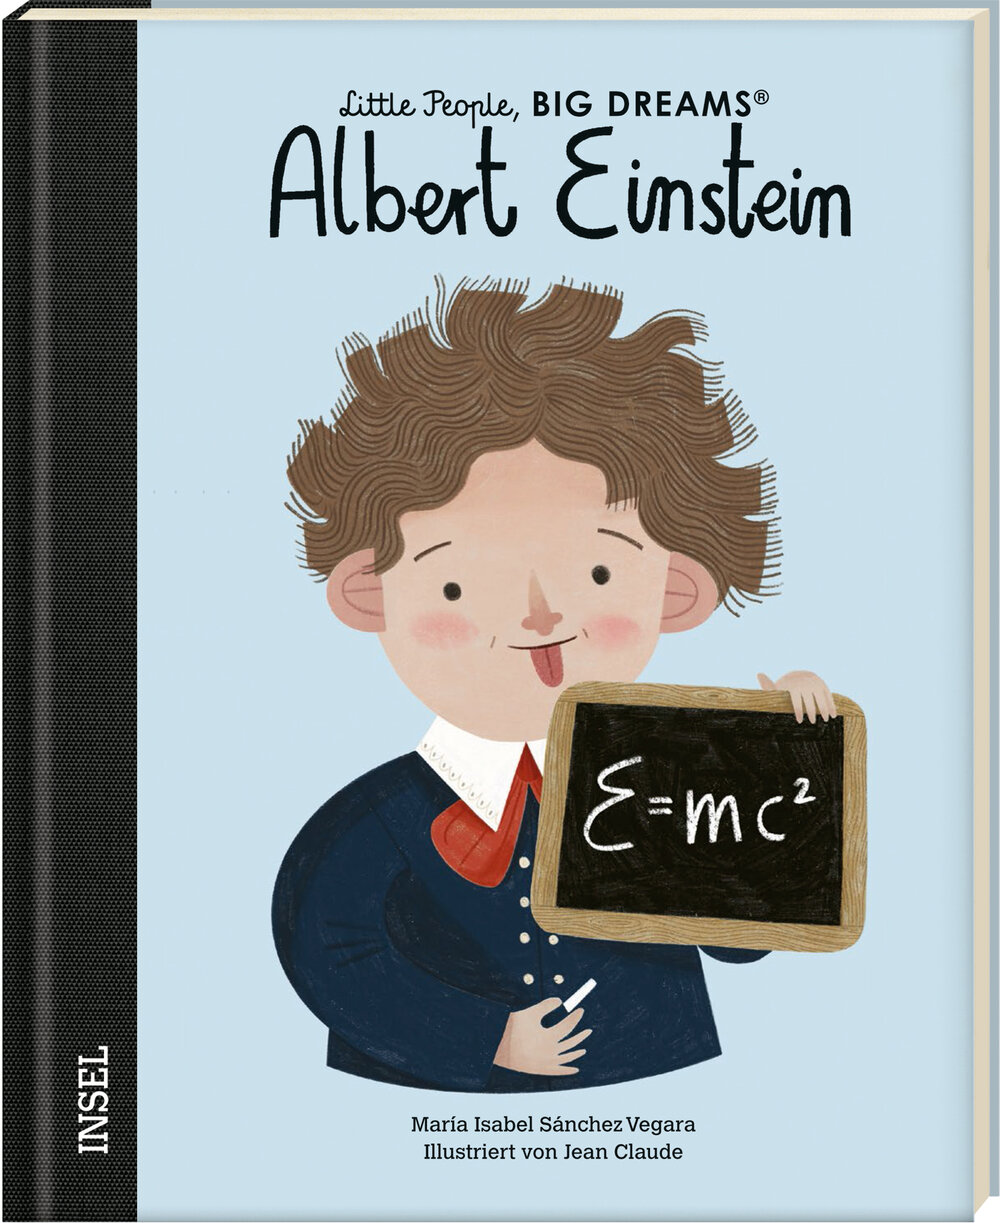 Little People BIG DREAMS „Albert Einstein“